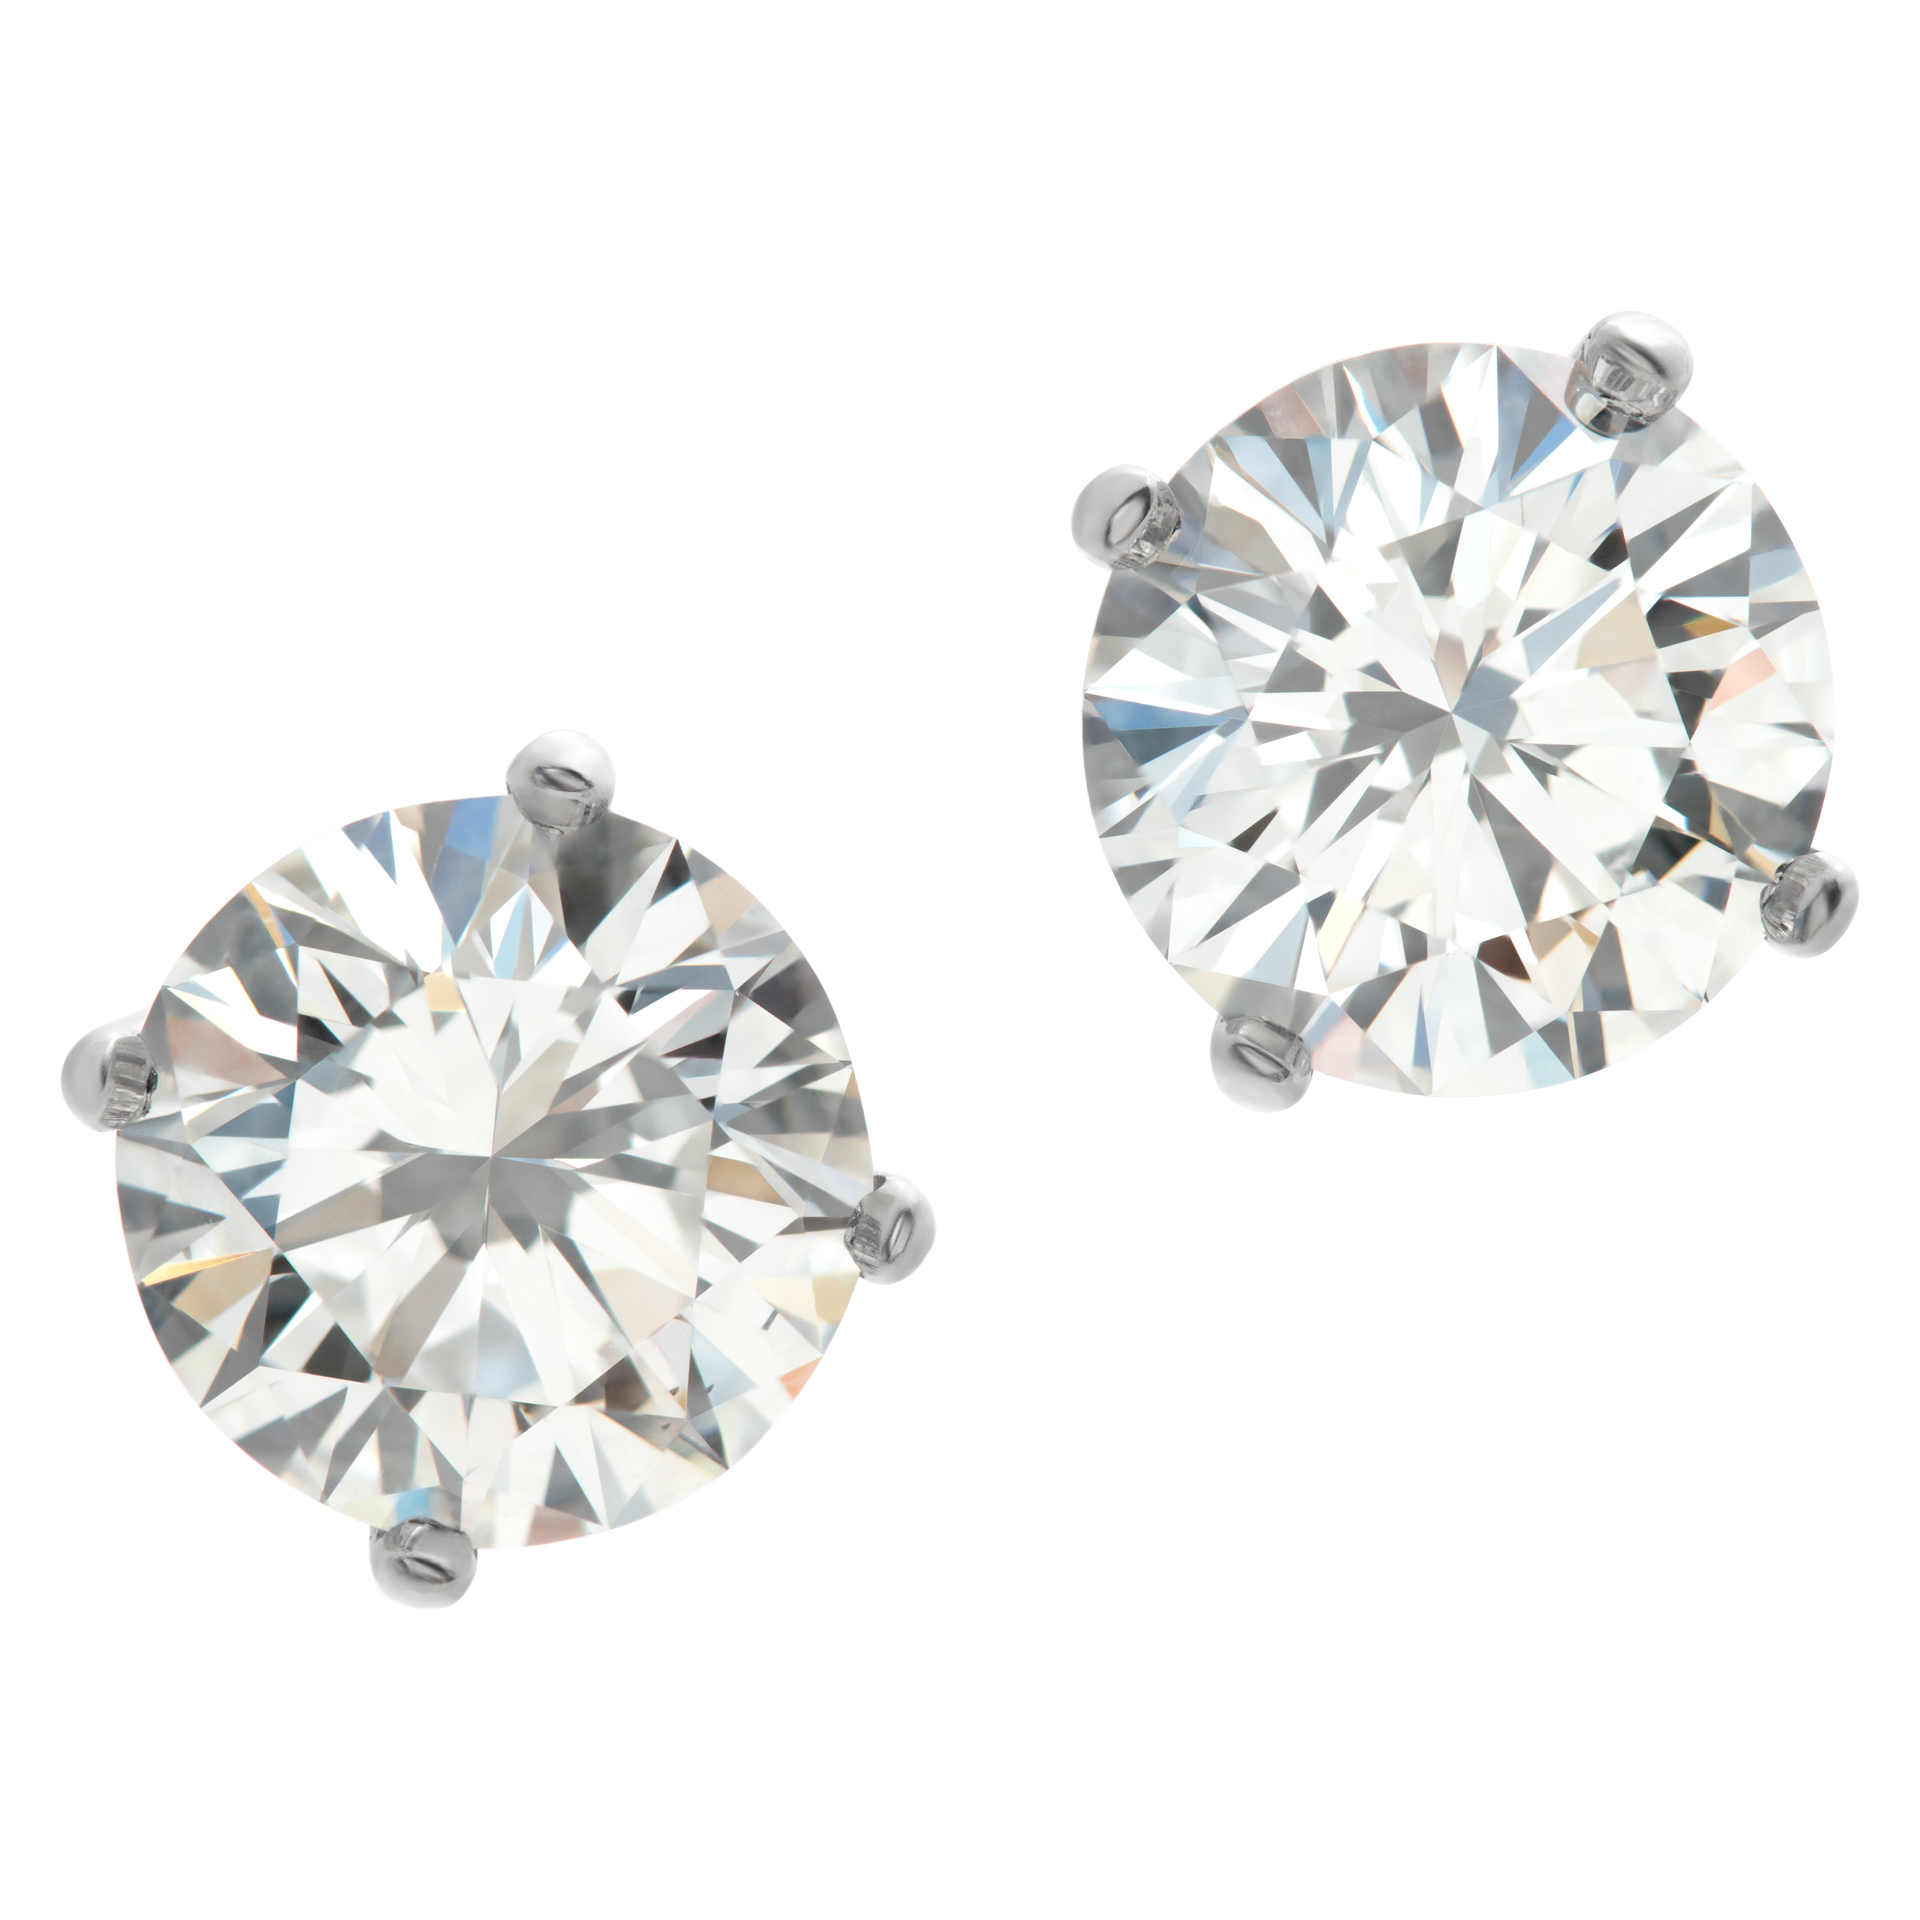 Tiffany & Co. platinum diamond studs earrings with round brilliant cut diamonds 1.66 carat (F color, VVS1 clarity) & 1.63 carat (F color, VVS1 clarity) (Stones)